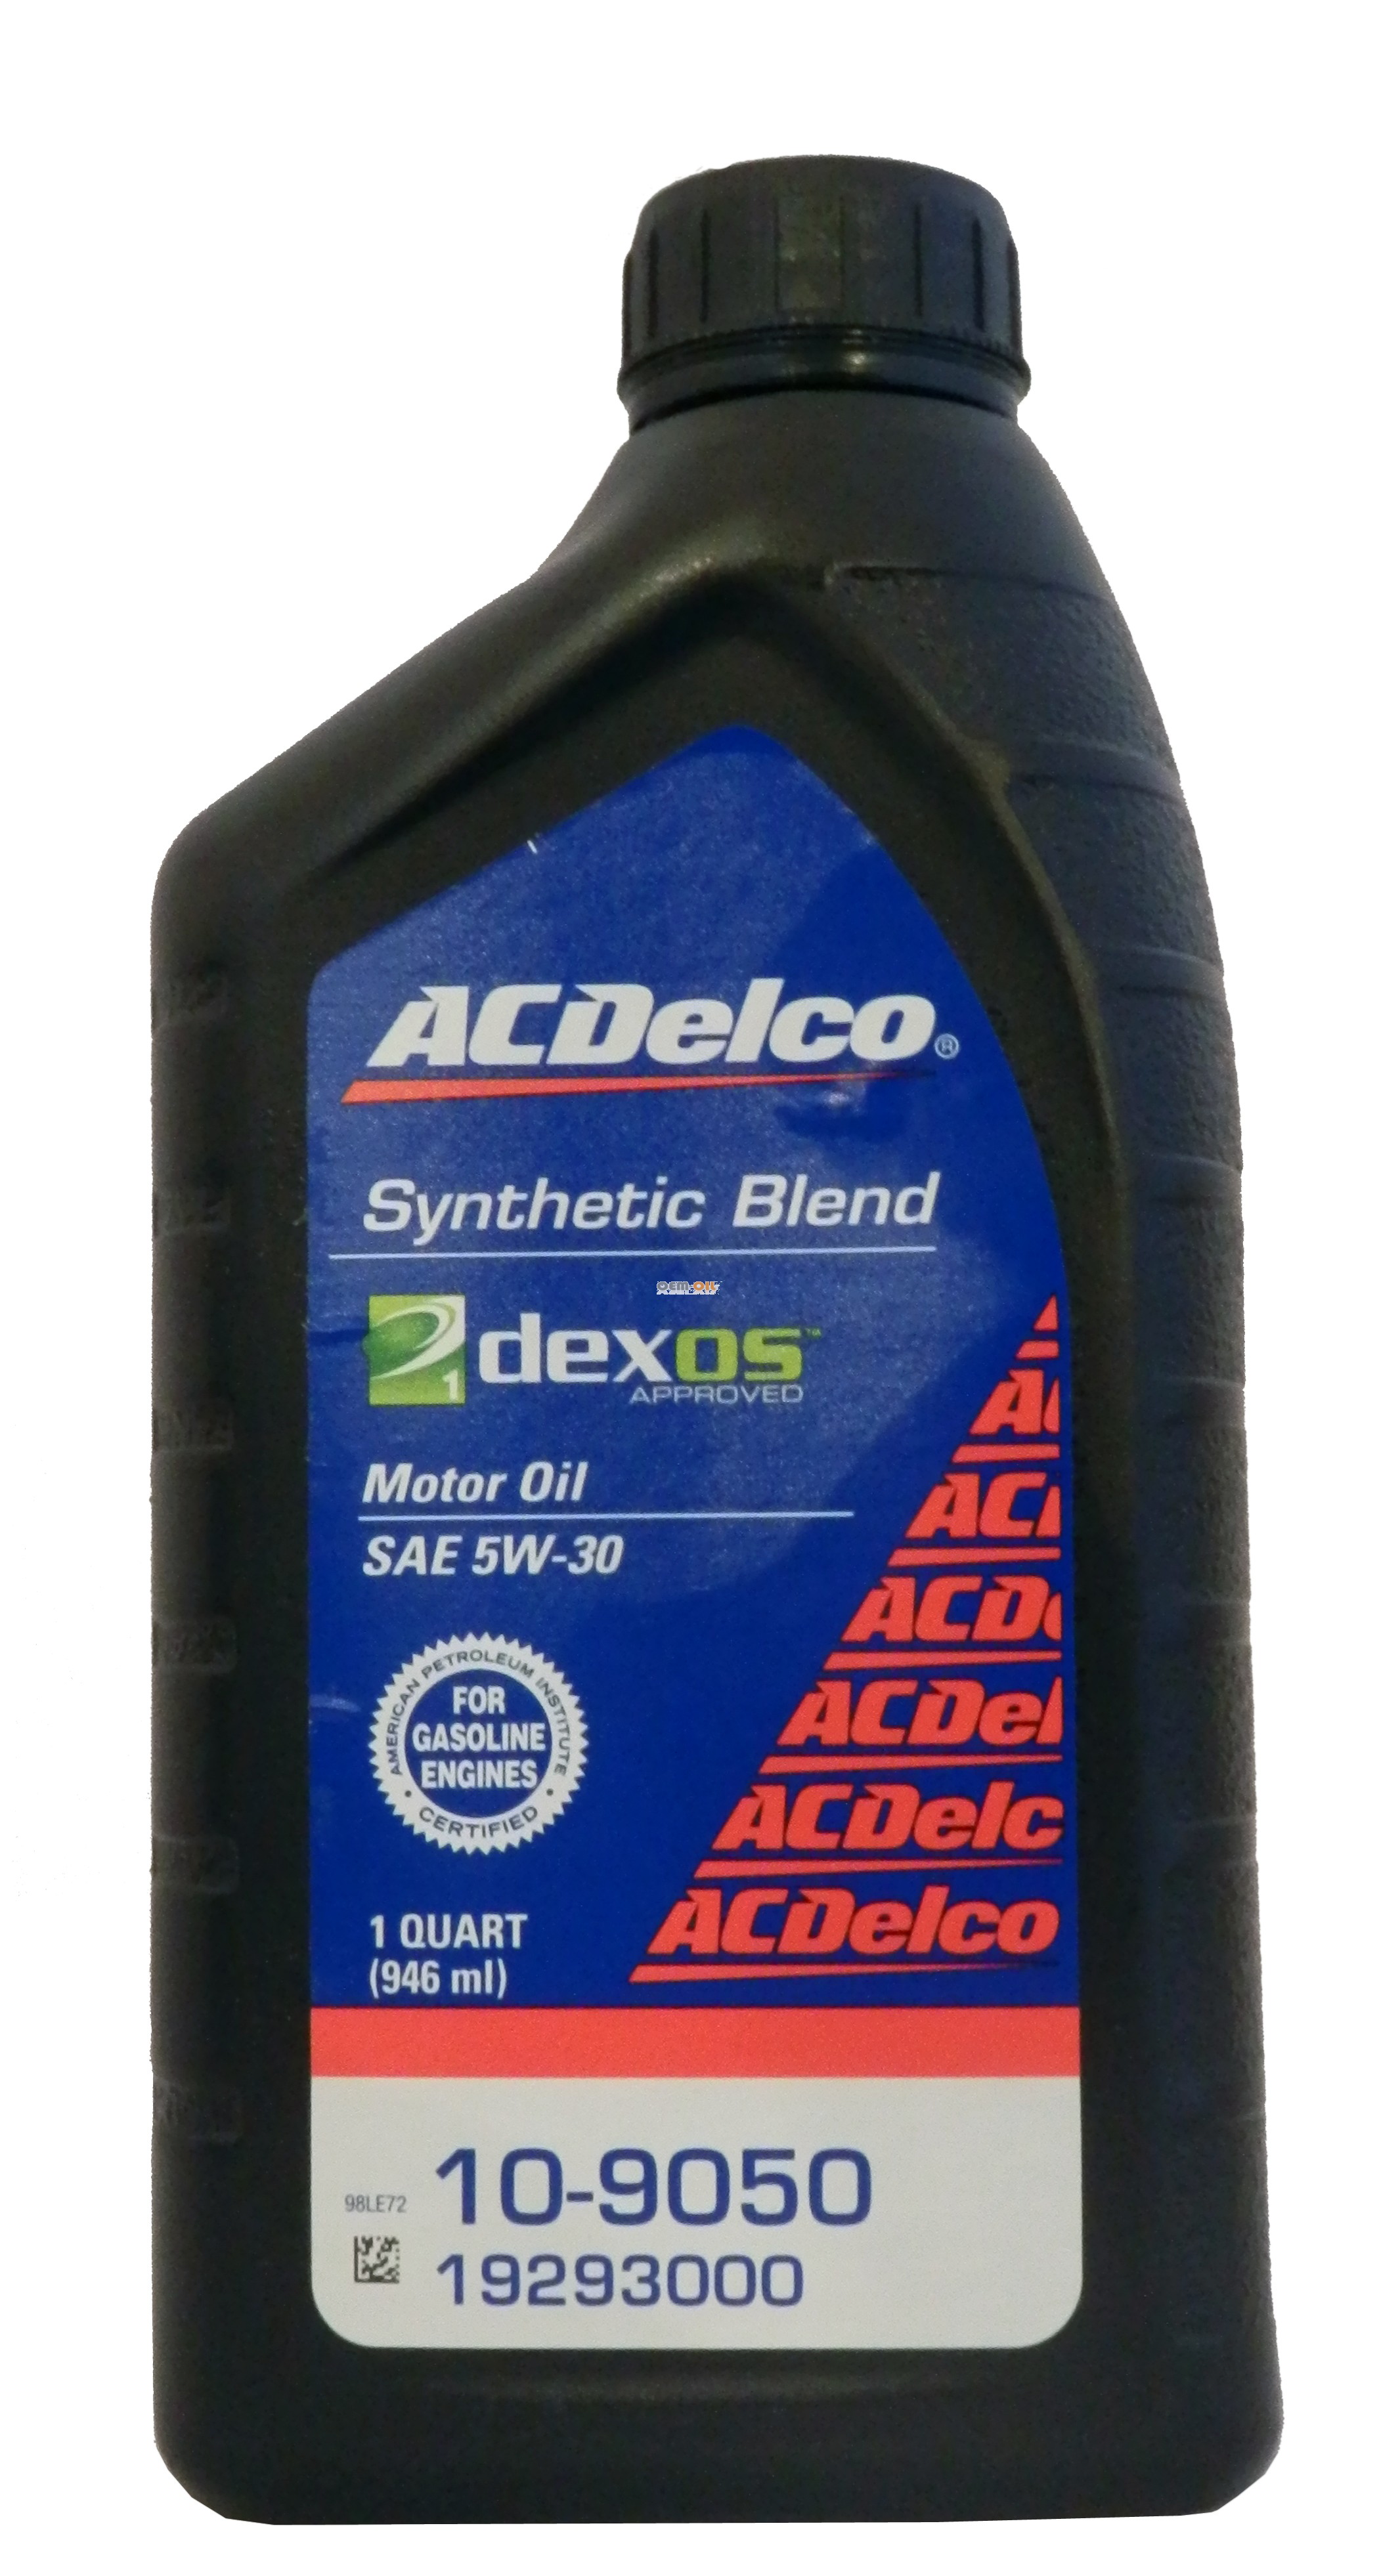 General Motors AC Delco Dexos 1 Synthetic Blend 5W-30